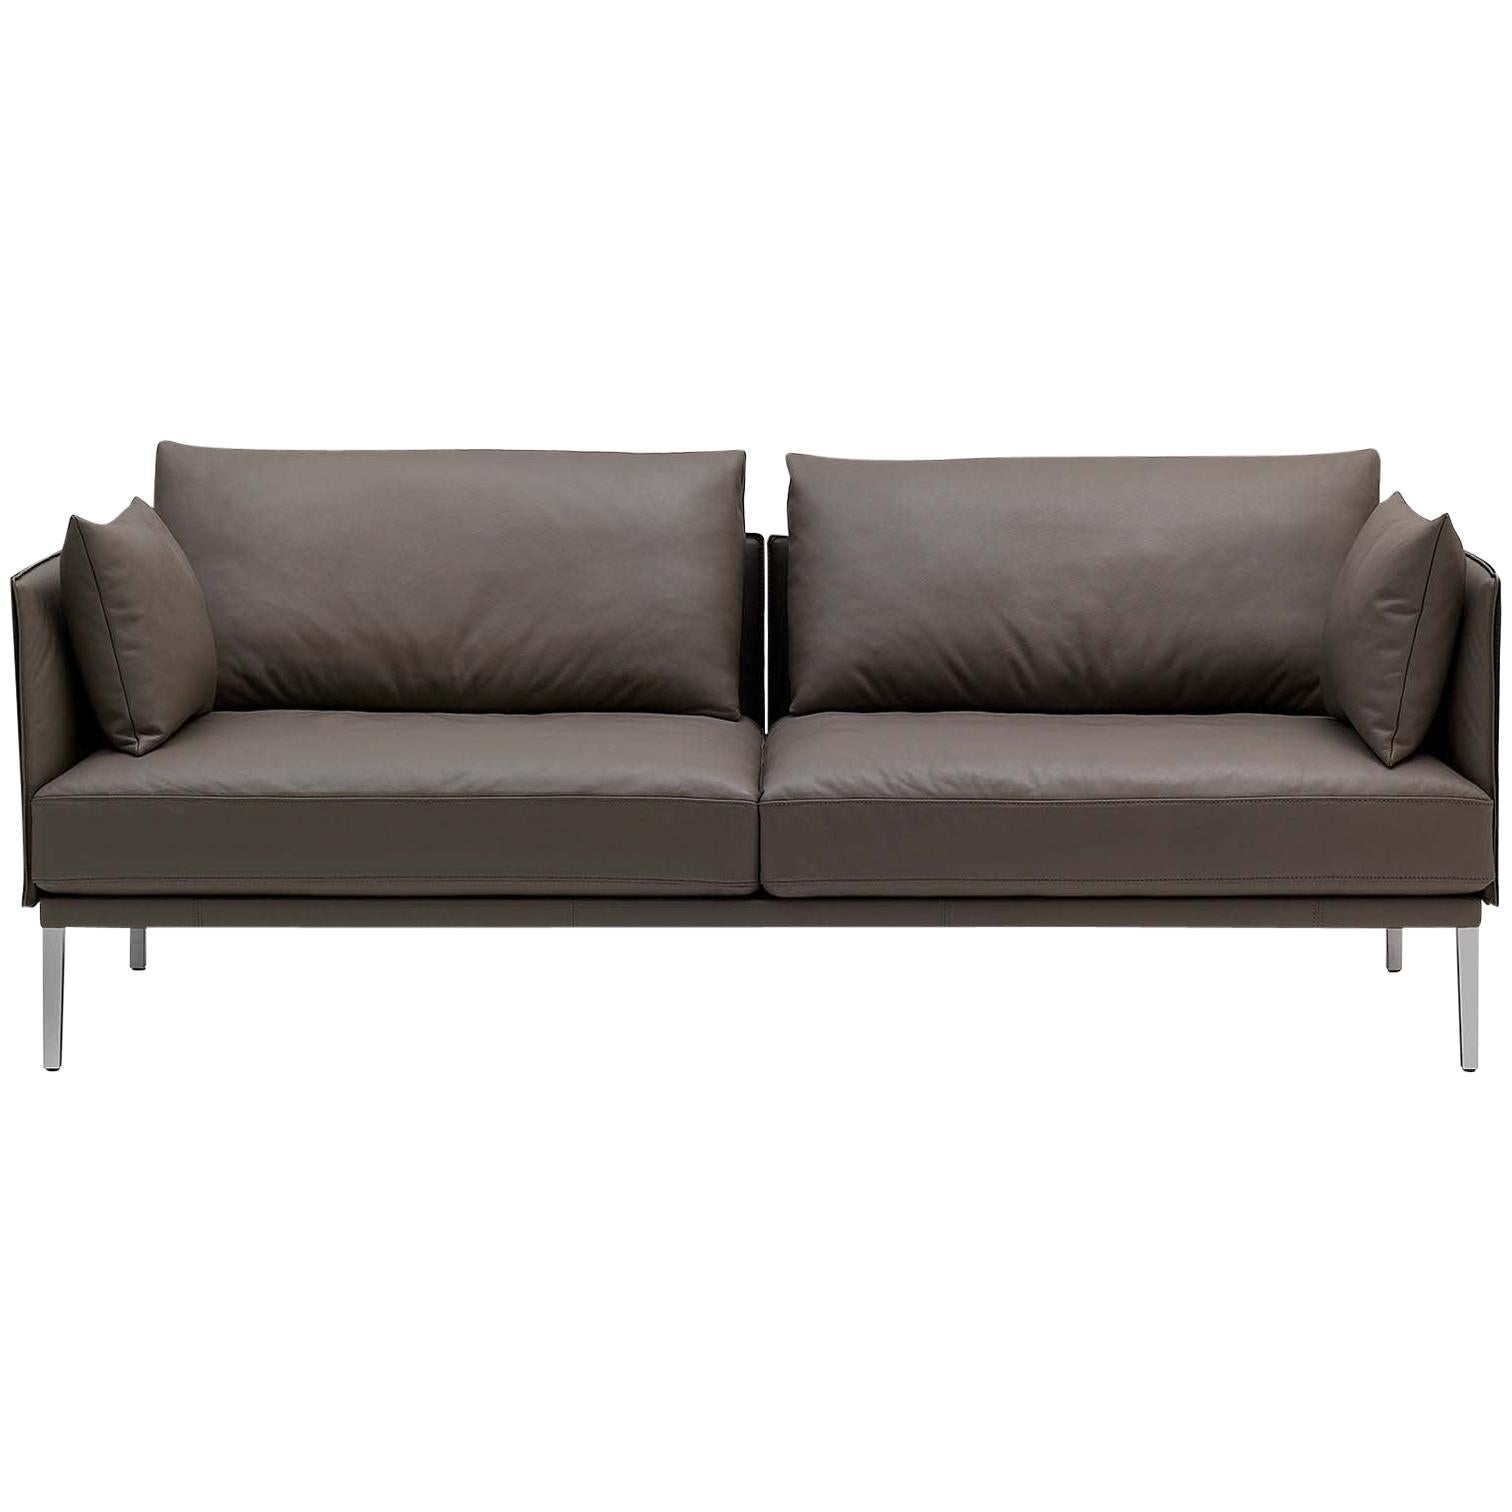 De Sede DS-333 Large Two-Seat Sofa in Schiefer Leather by De Sede Design Team